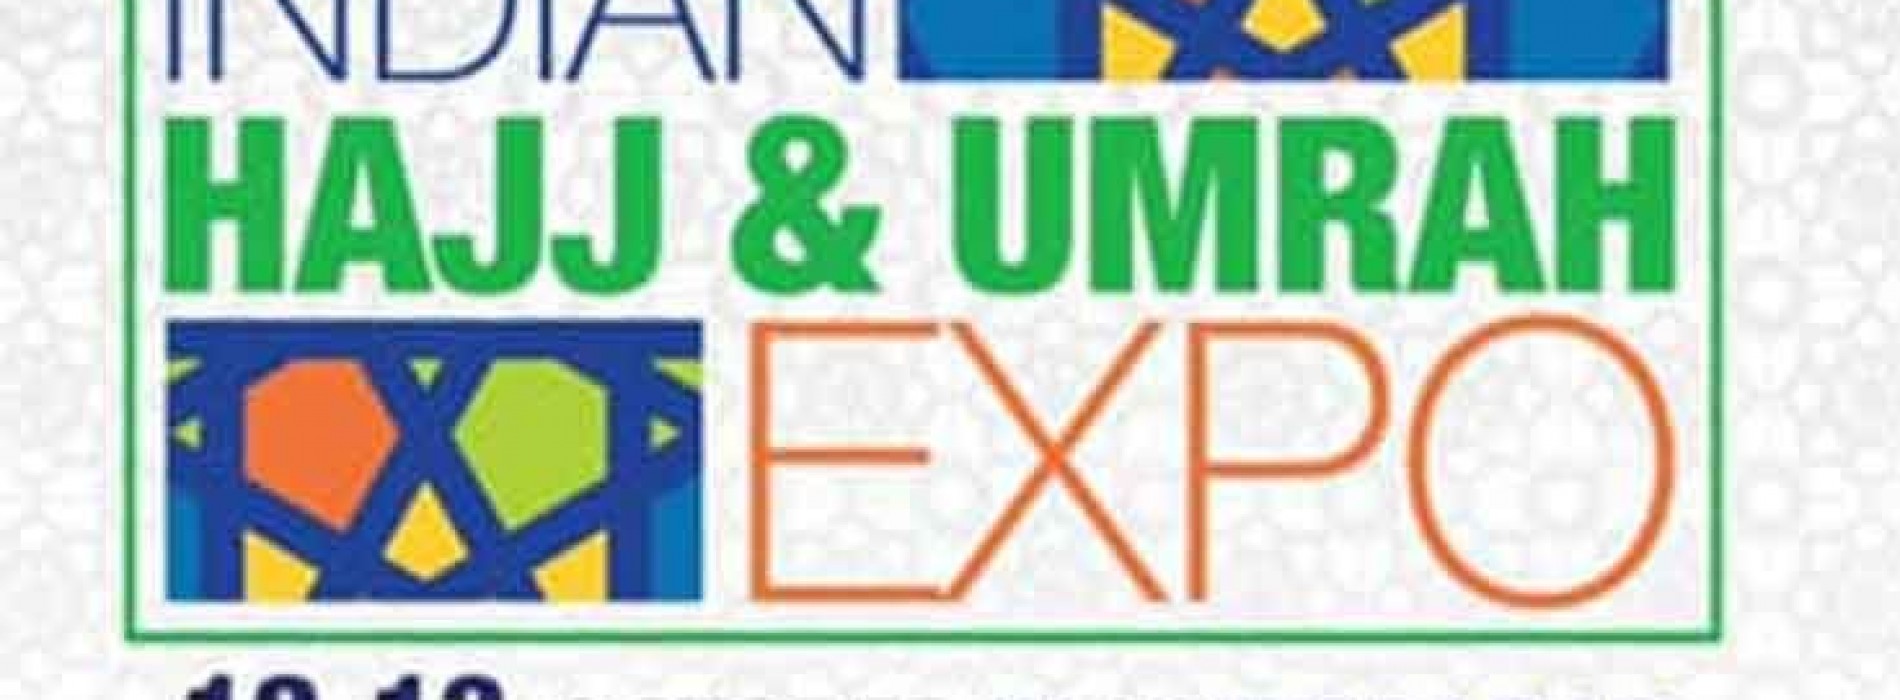 Indian Hajj & Umrah Expo in Hyderabad on 12-13 October 2019